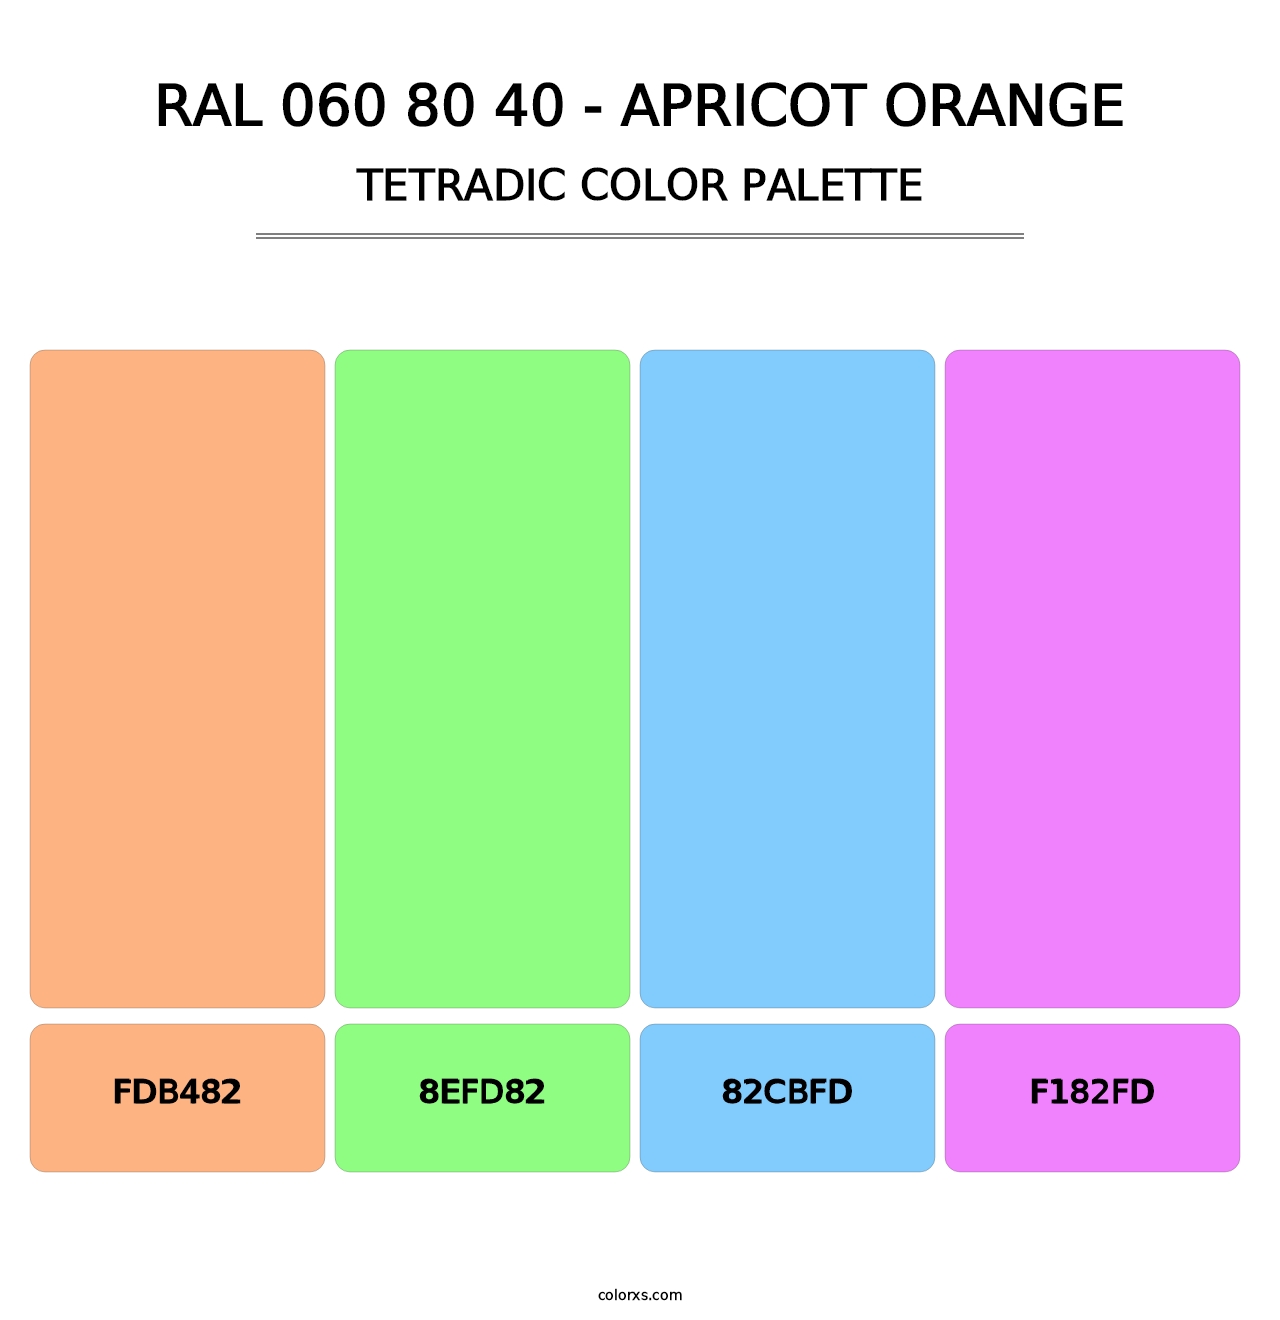 RAL 060 80 40 - Apricot Orange - Tetradic Color Palette